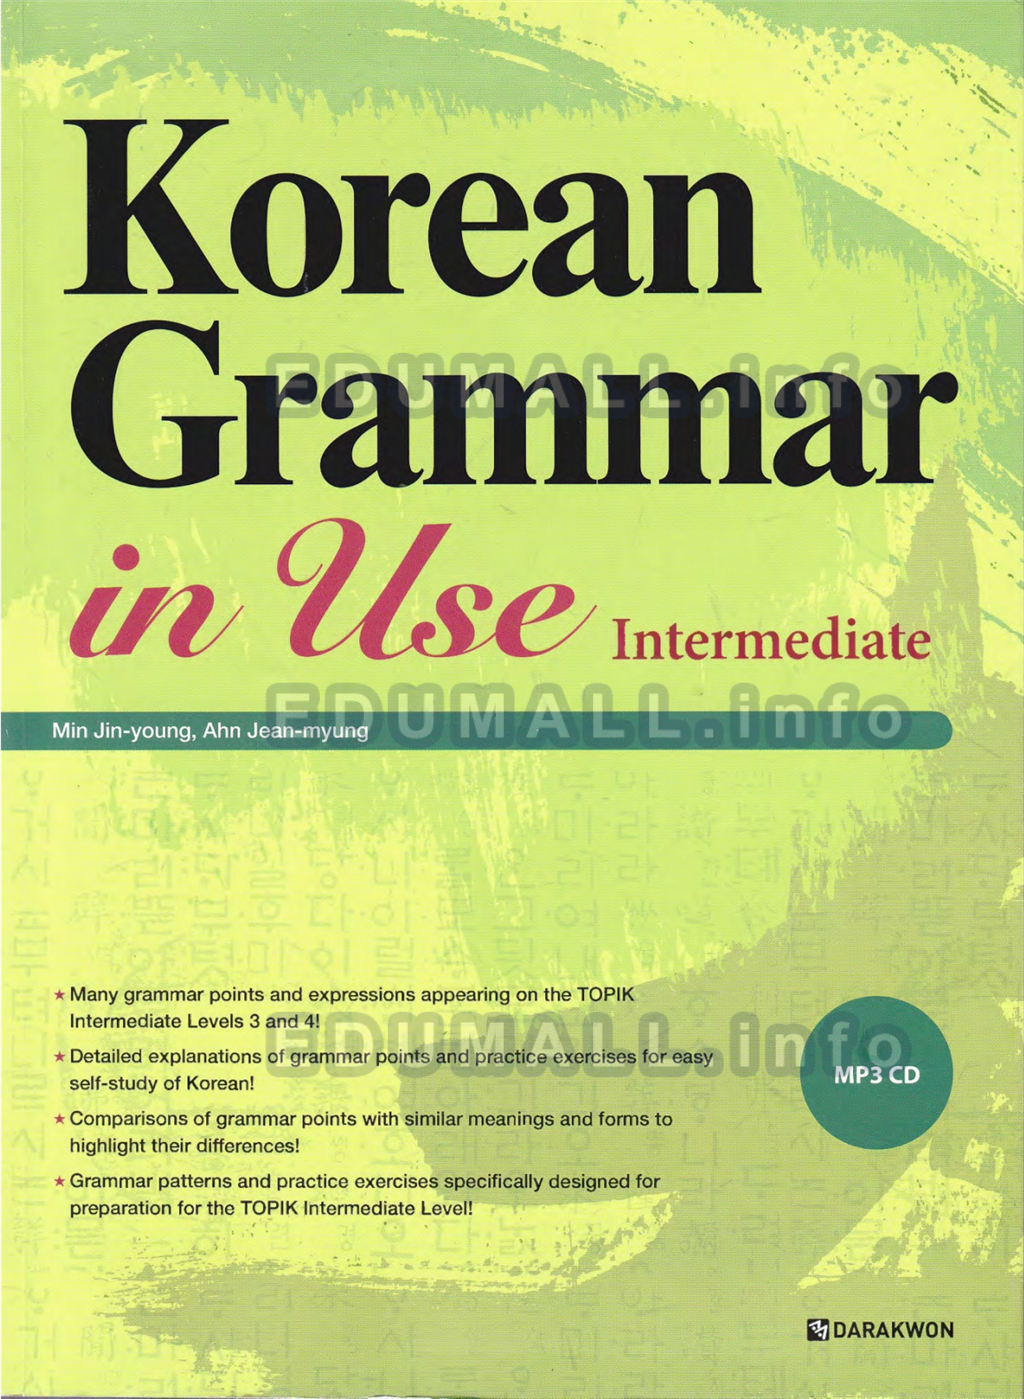 Min Jin-young & Ahn Jean-myung - Korean grammar in use